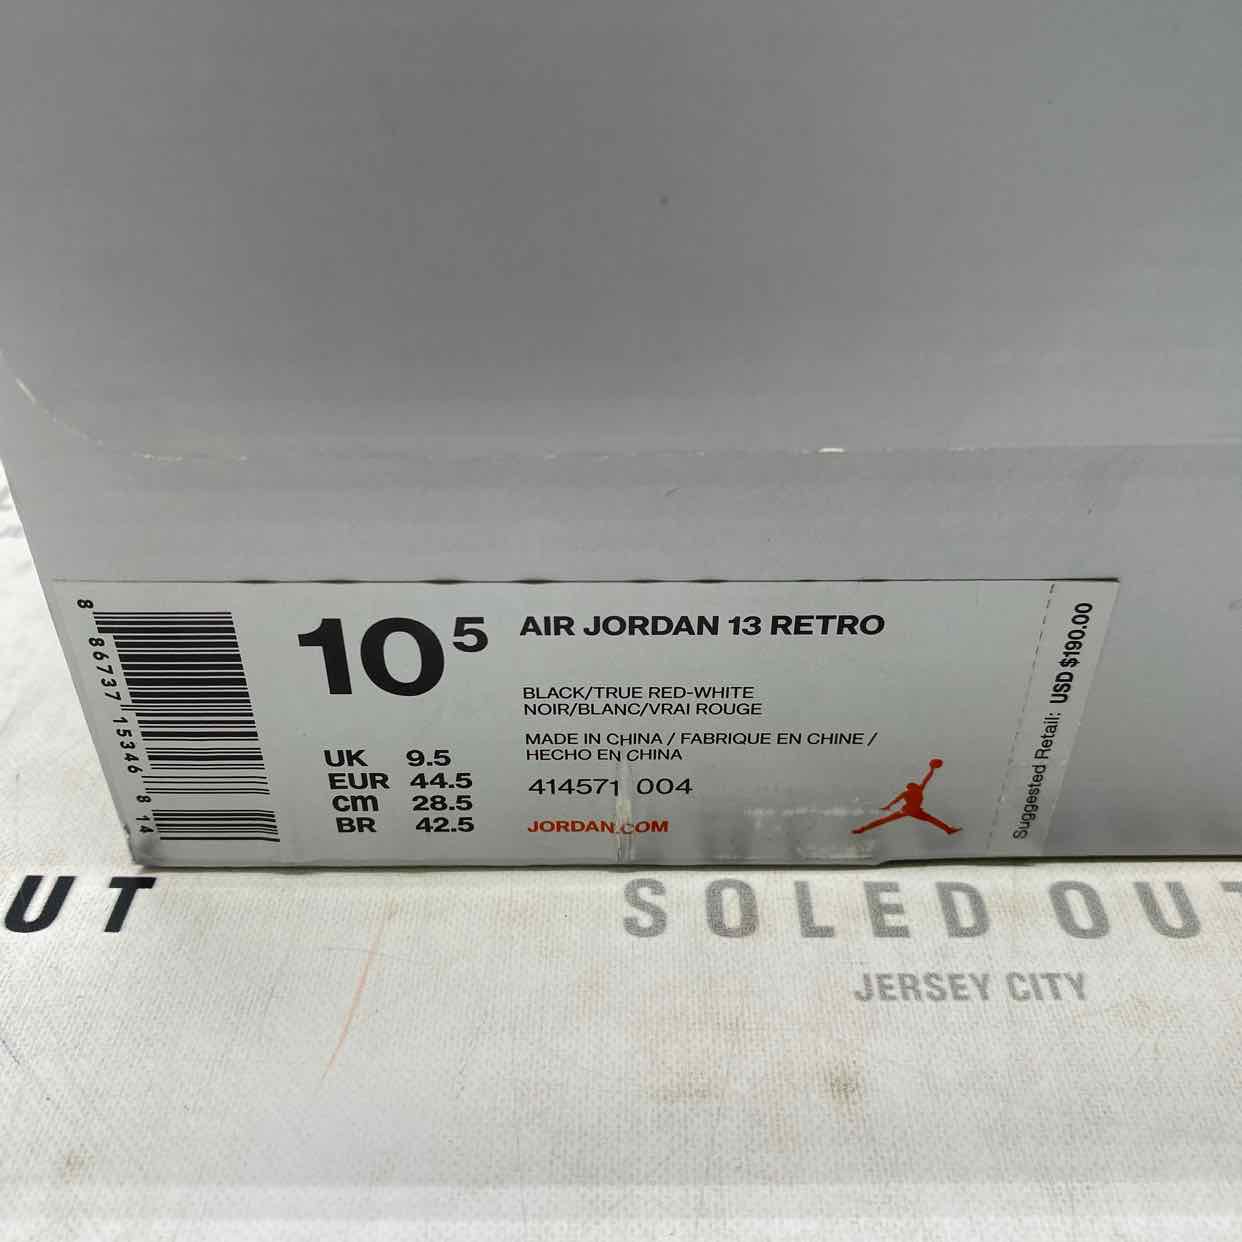 Air Jordan 13 Retro "Bred" 2017 Used Size 10.5